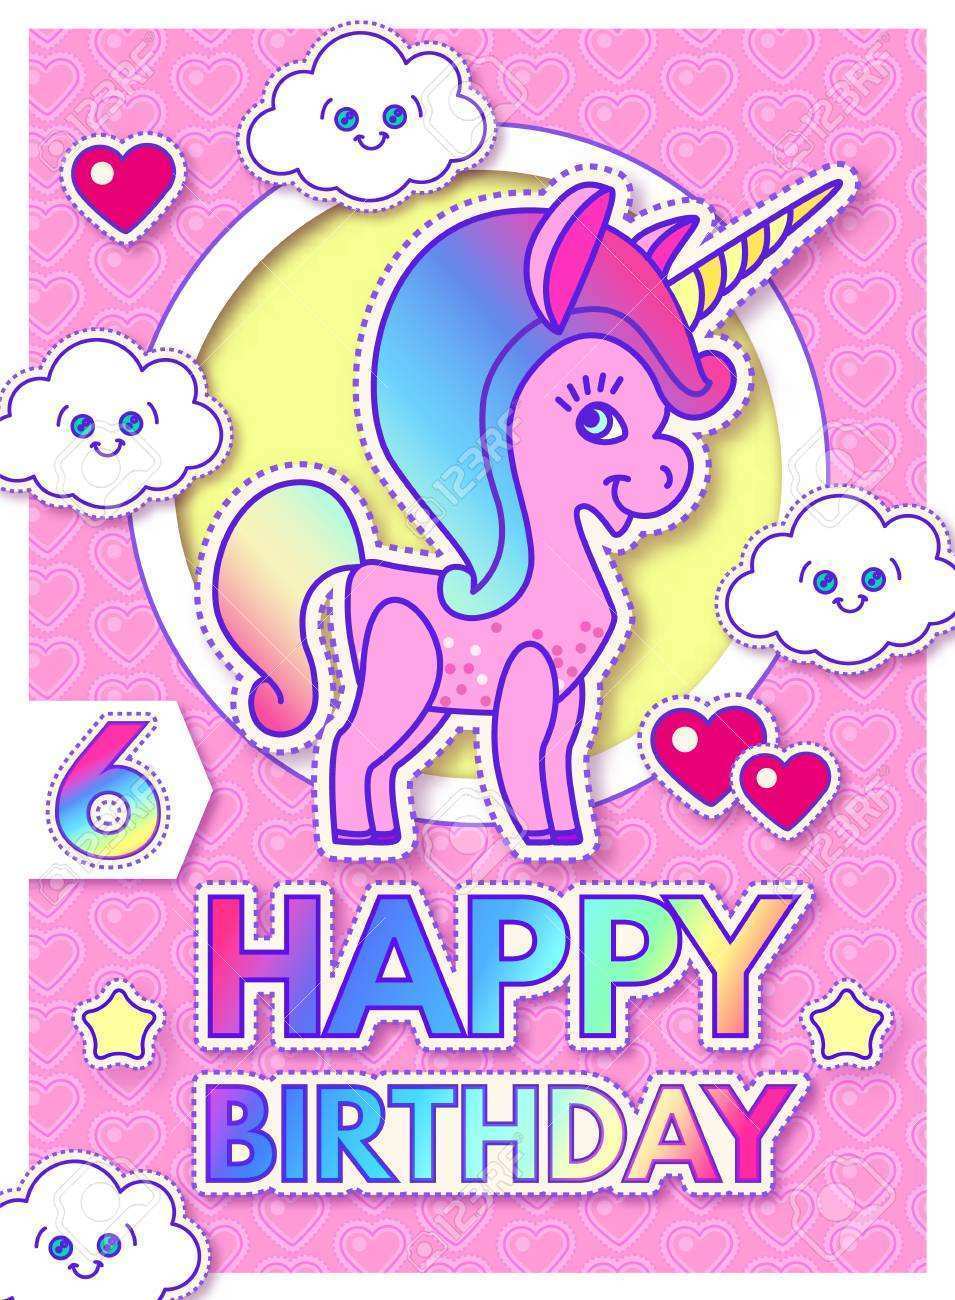 42 Creative Birthday Card Template Unicorn With Stunning Design with Birthday Card Template Unicorn